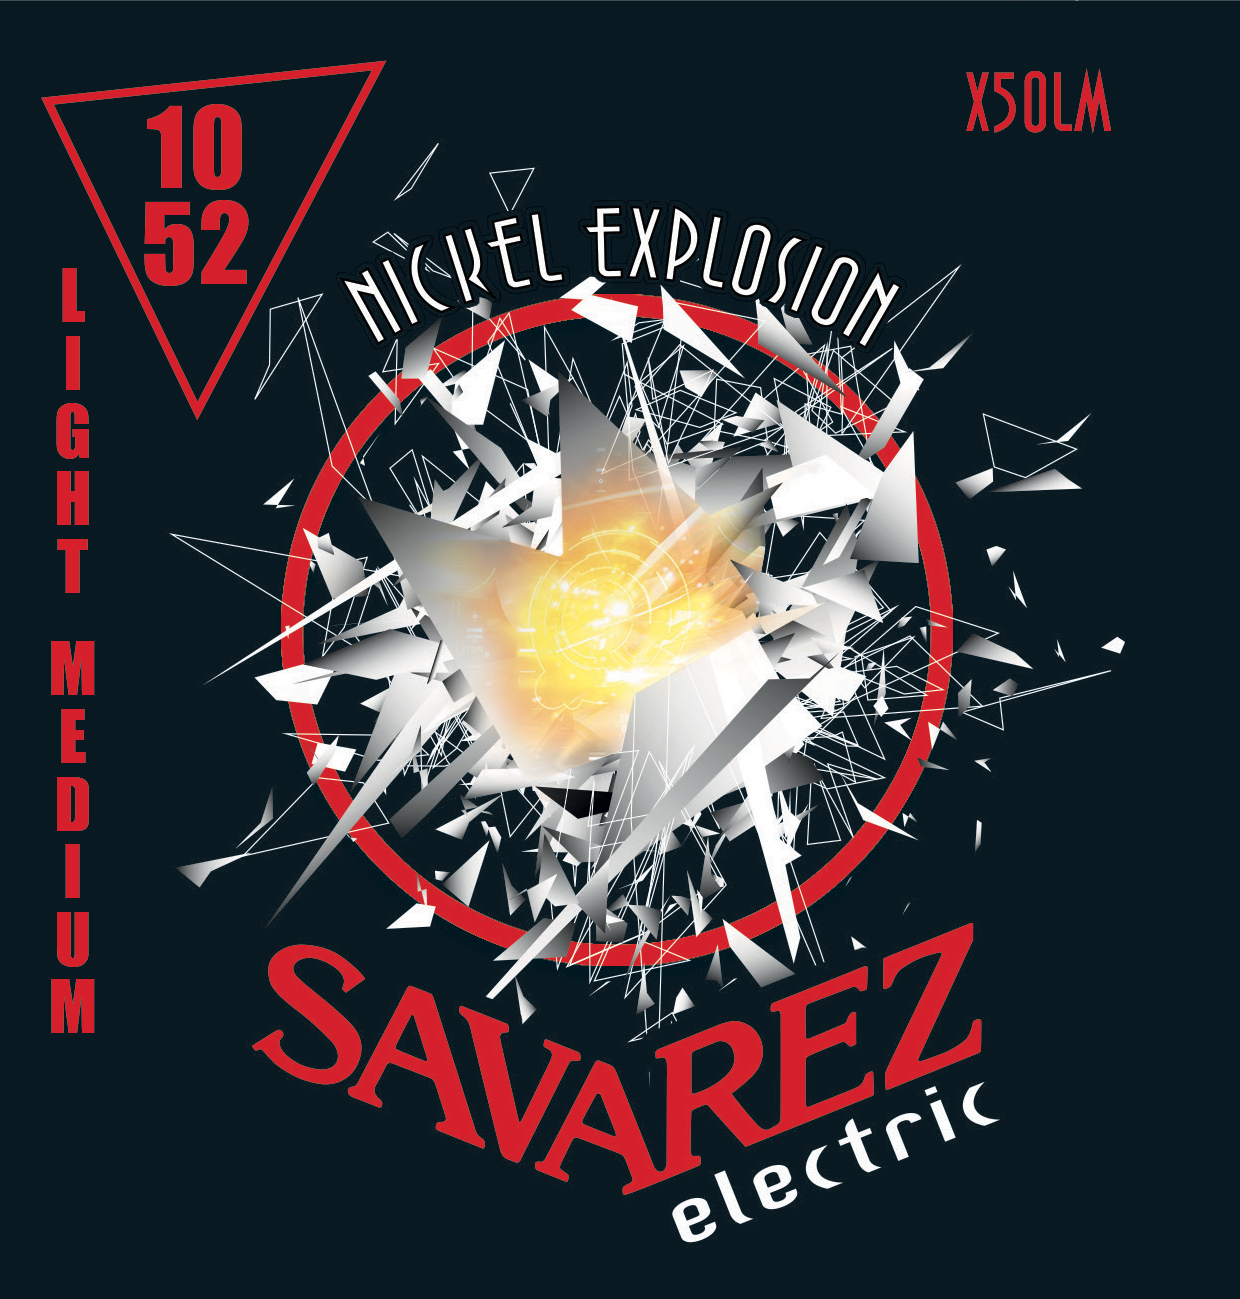 SAVAREZ ELECTRIC EXPLOSION X50LM